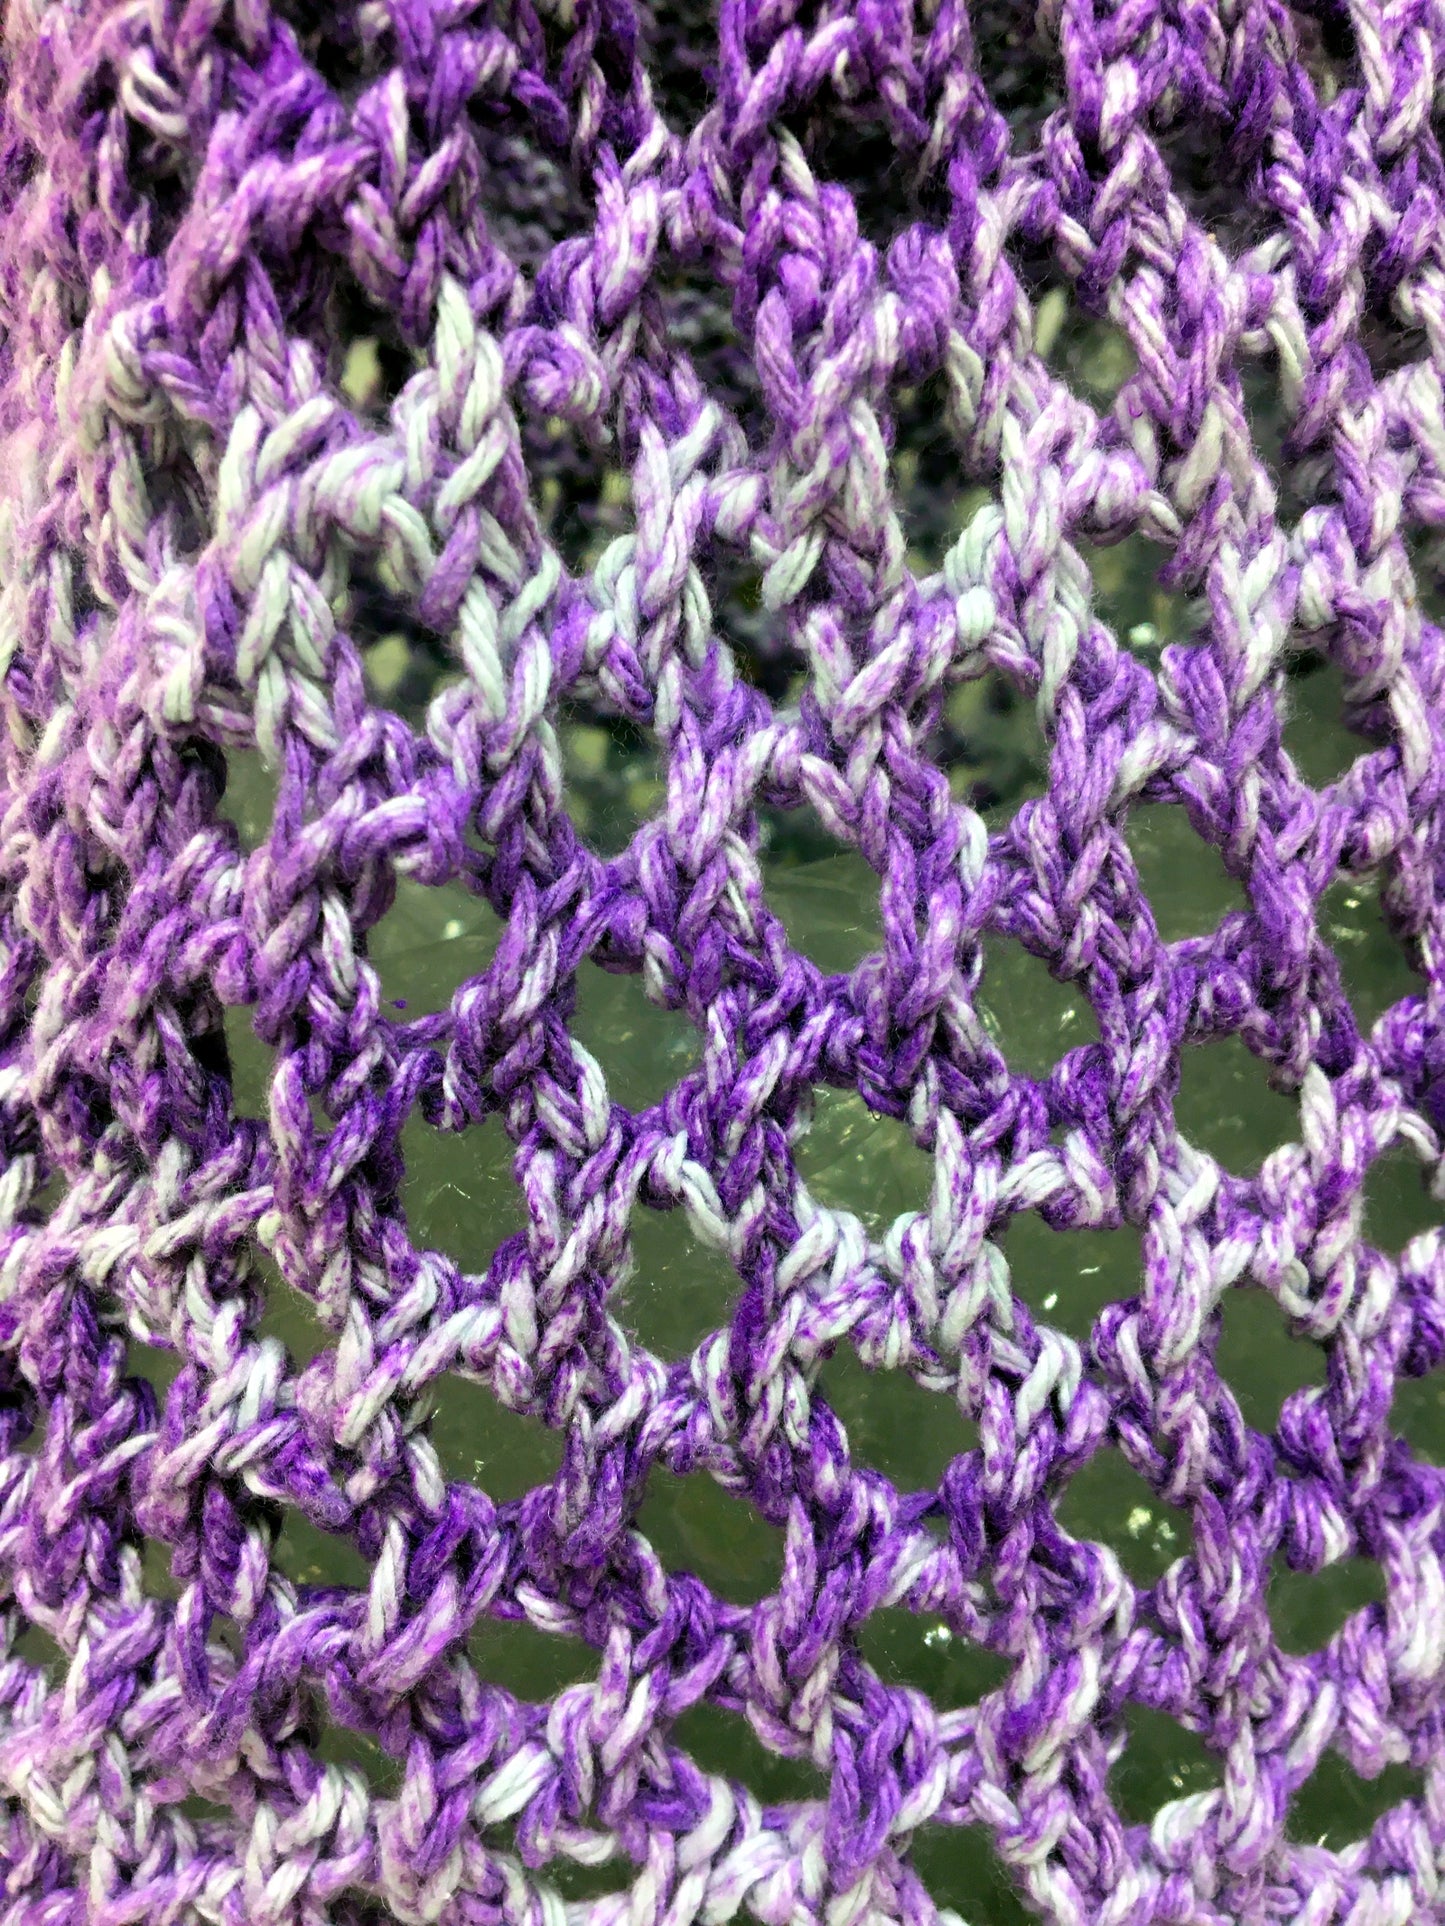 Purple Splash Knitted Market Bag